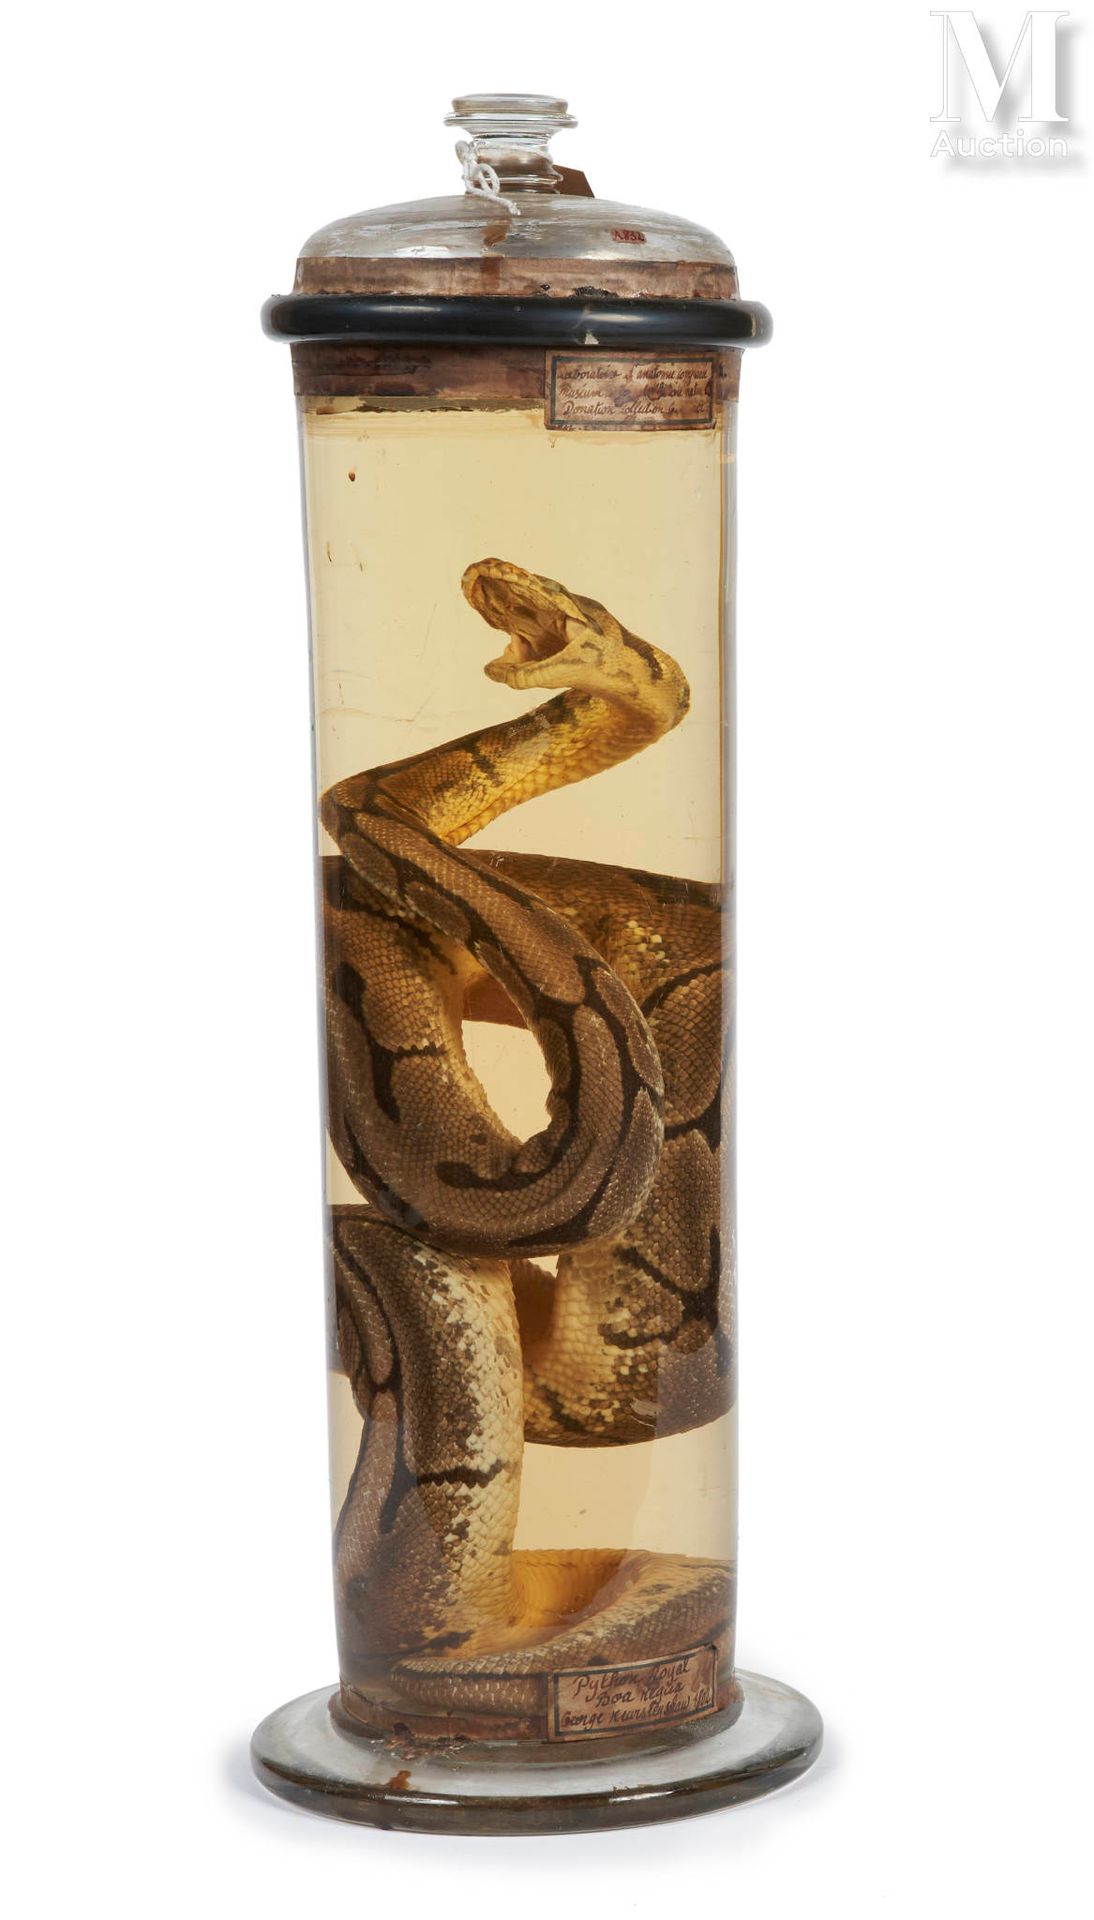 PYTHON ROYAL 整个呈现在液体防腐剂中。非常漂亮的老式圆玻璃瓶。

高度：56.5厘米，直径：19.5厘米。

II/B, Python regius&hellip;